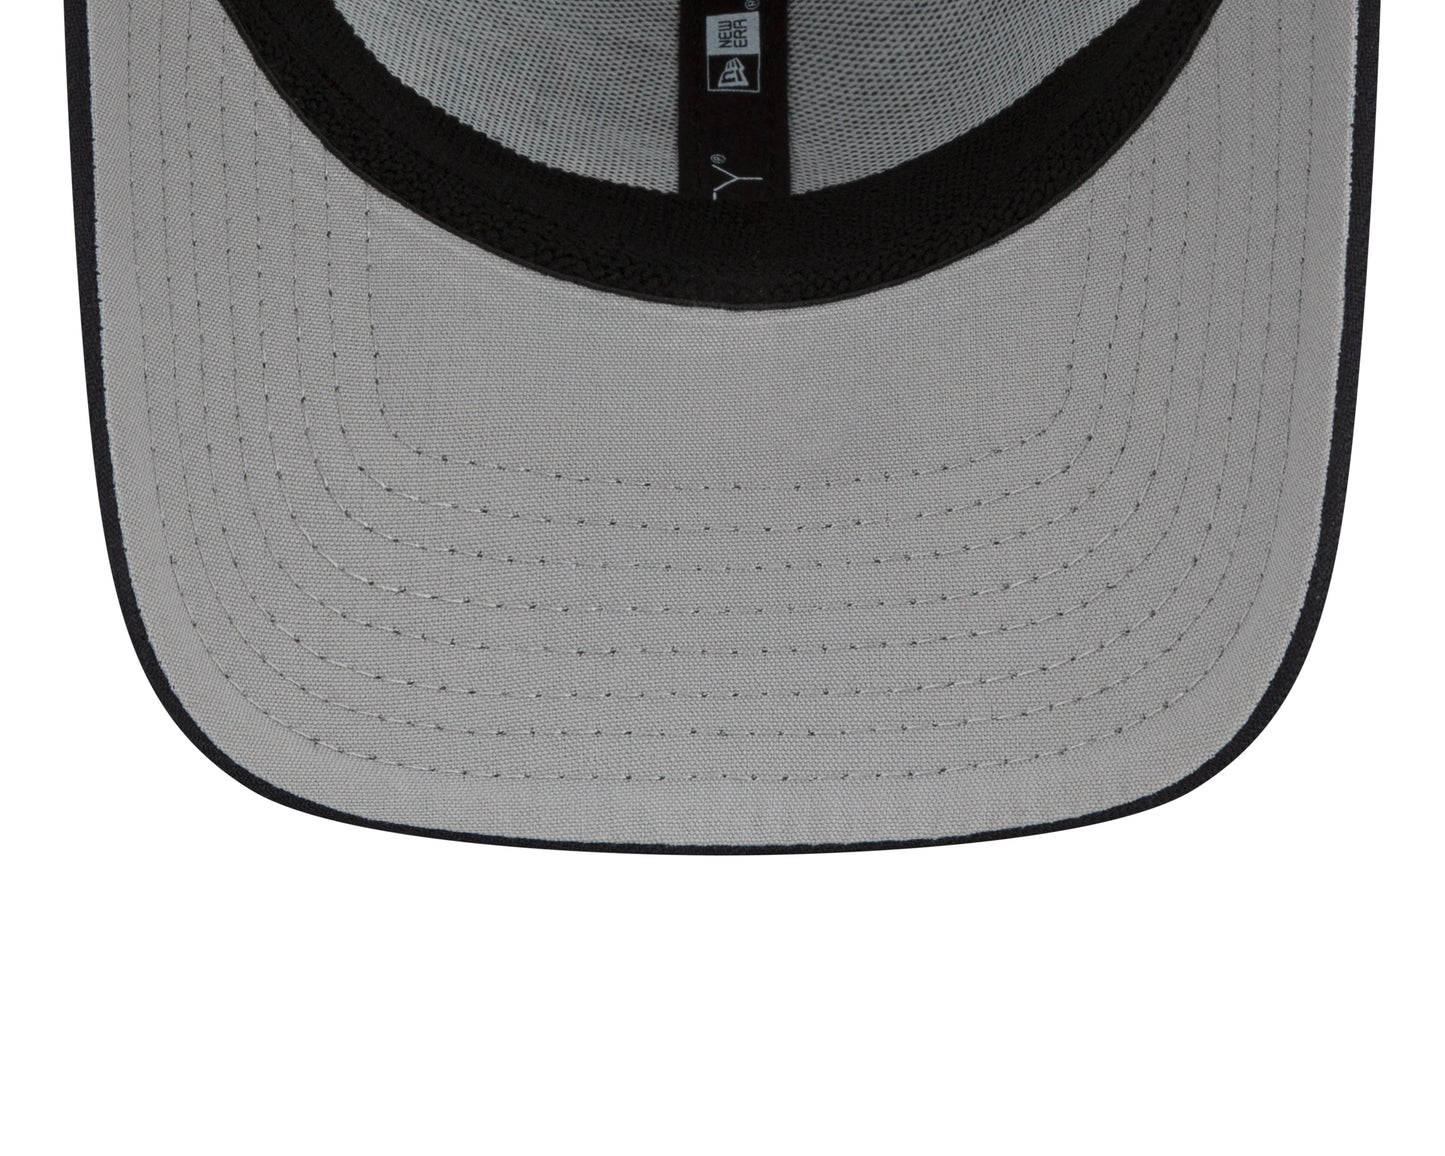 Men's Chicago White Sox New Era Black 2023 Spring Training 39THIRTY Flex-Fit Hat